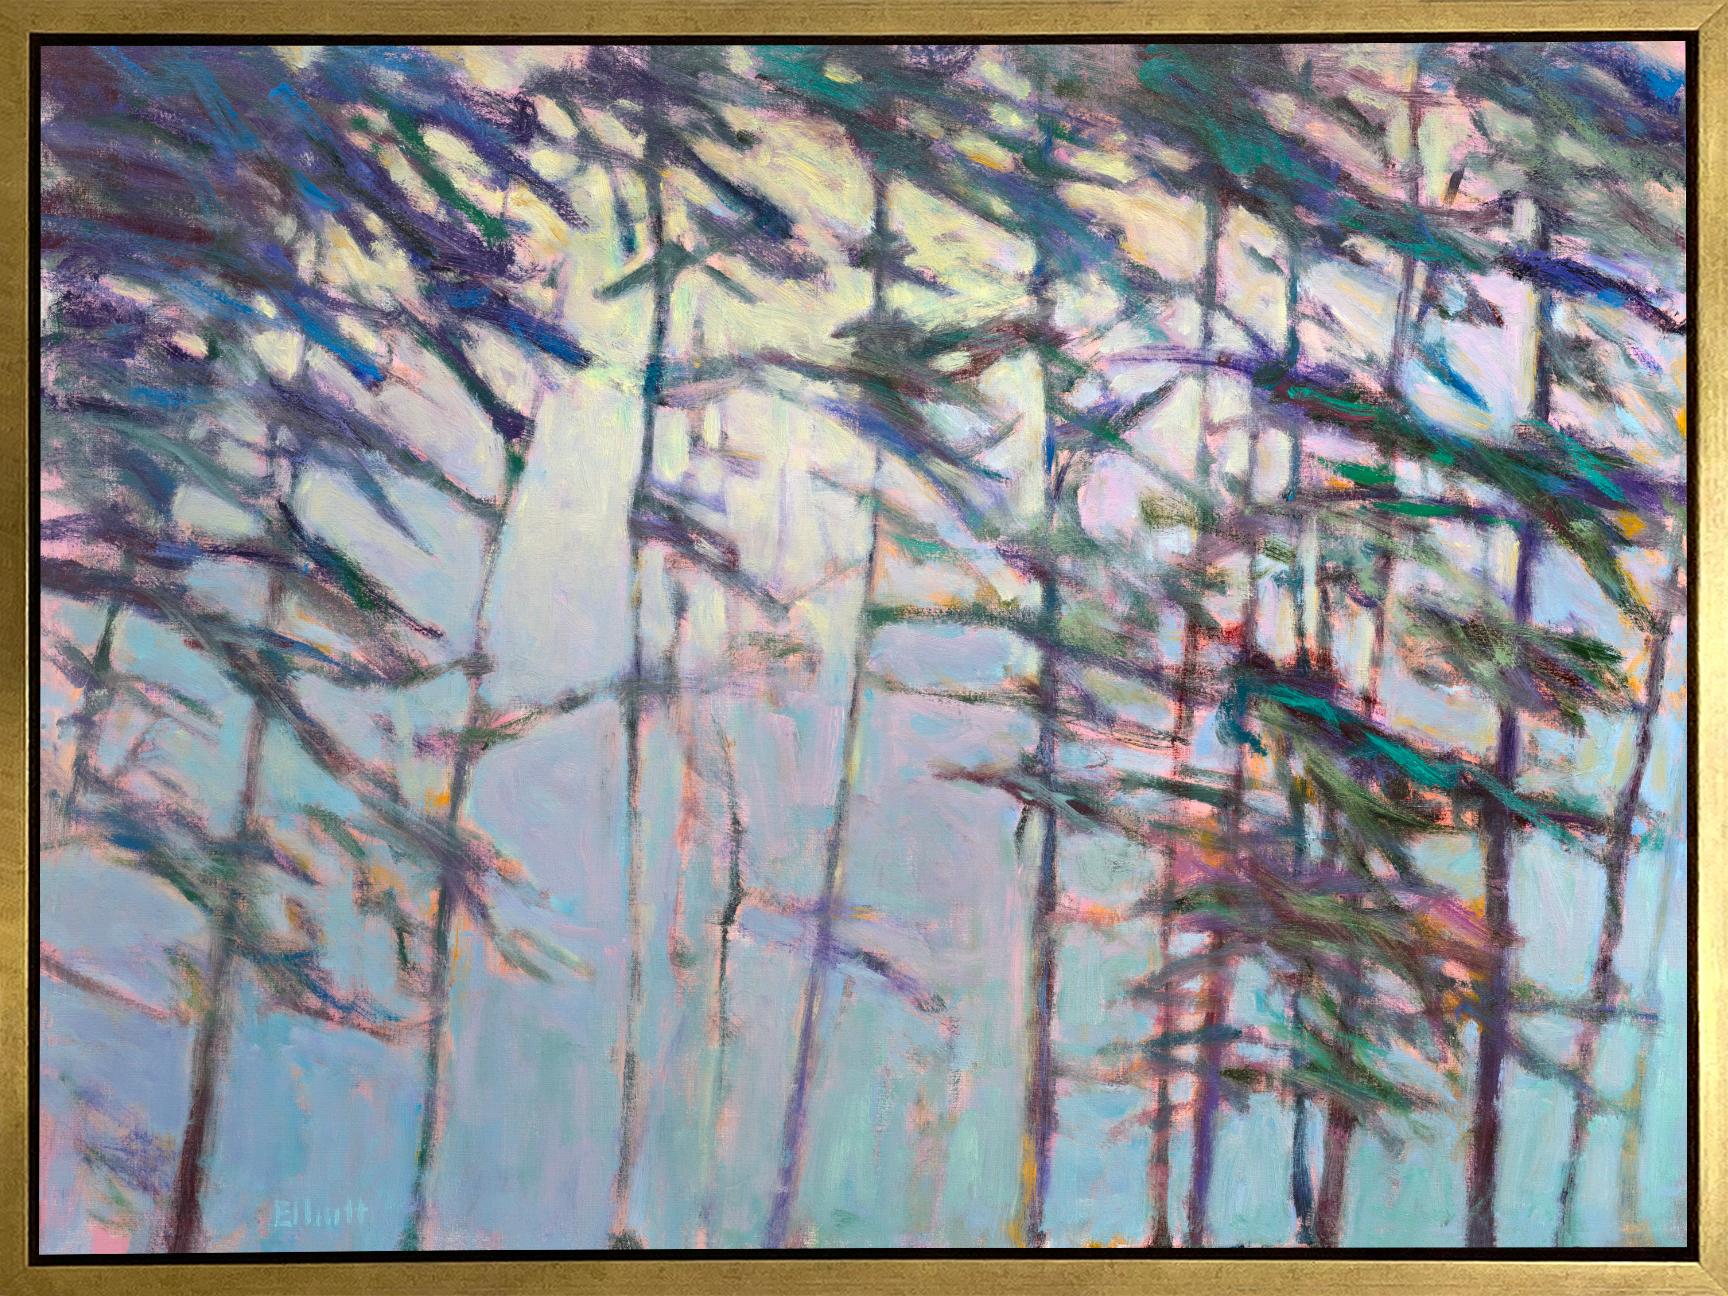 Ken Elliott Landscape Print - "Light Emerging - Diffused Blue, " Framed Limited Edition Giclee Print, 30" x 40"